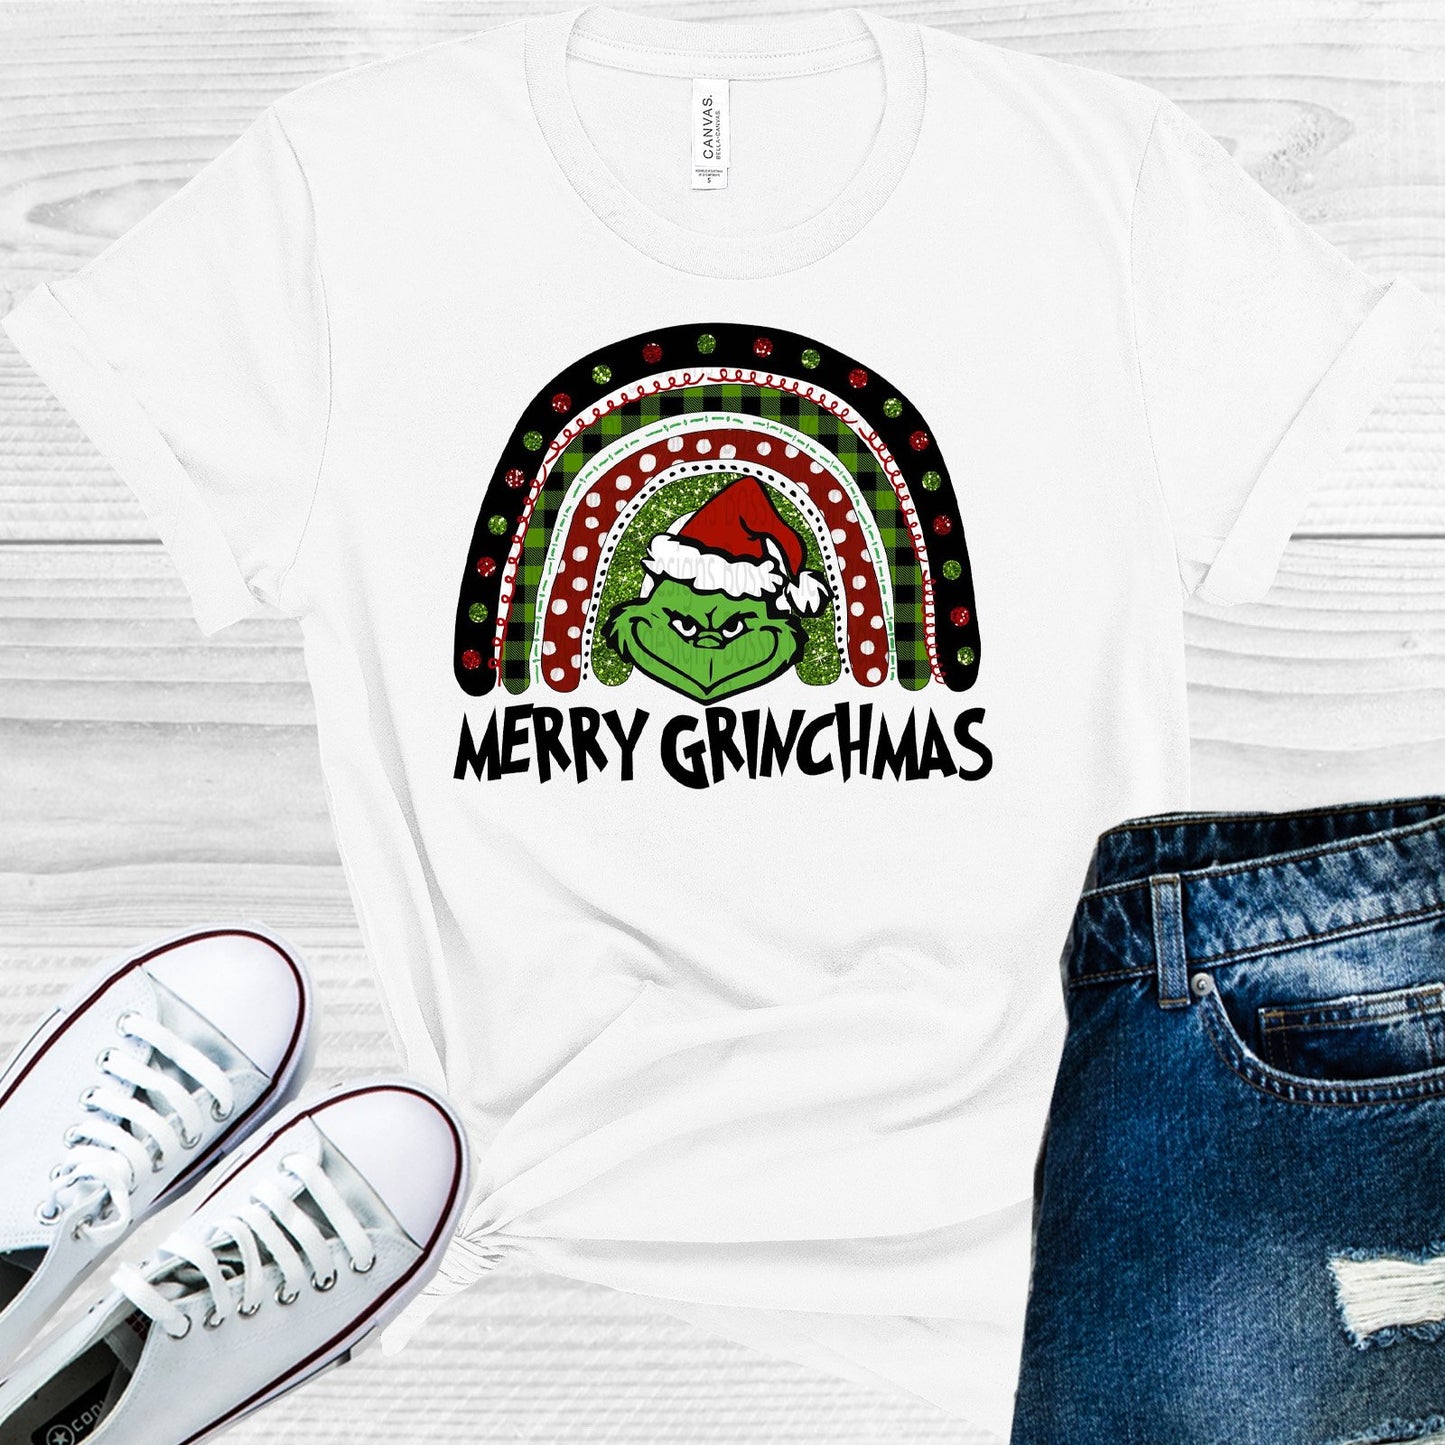 Merry Grinchmas Graphic Tee Graphic Tee